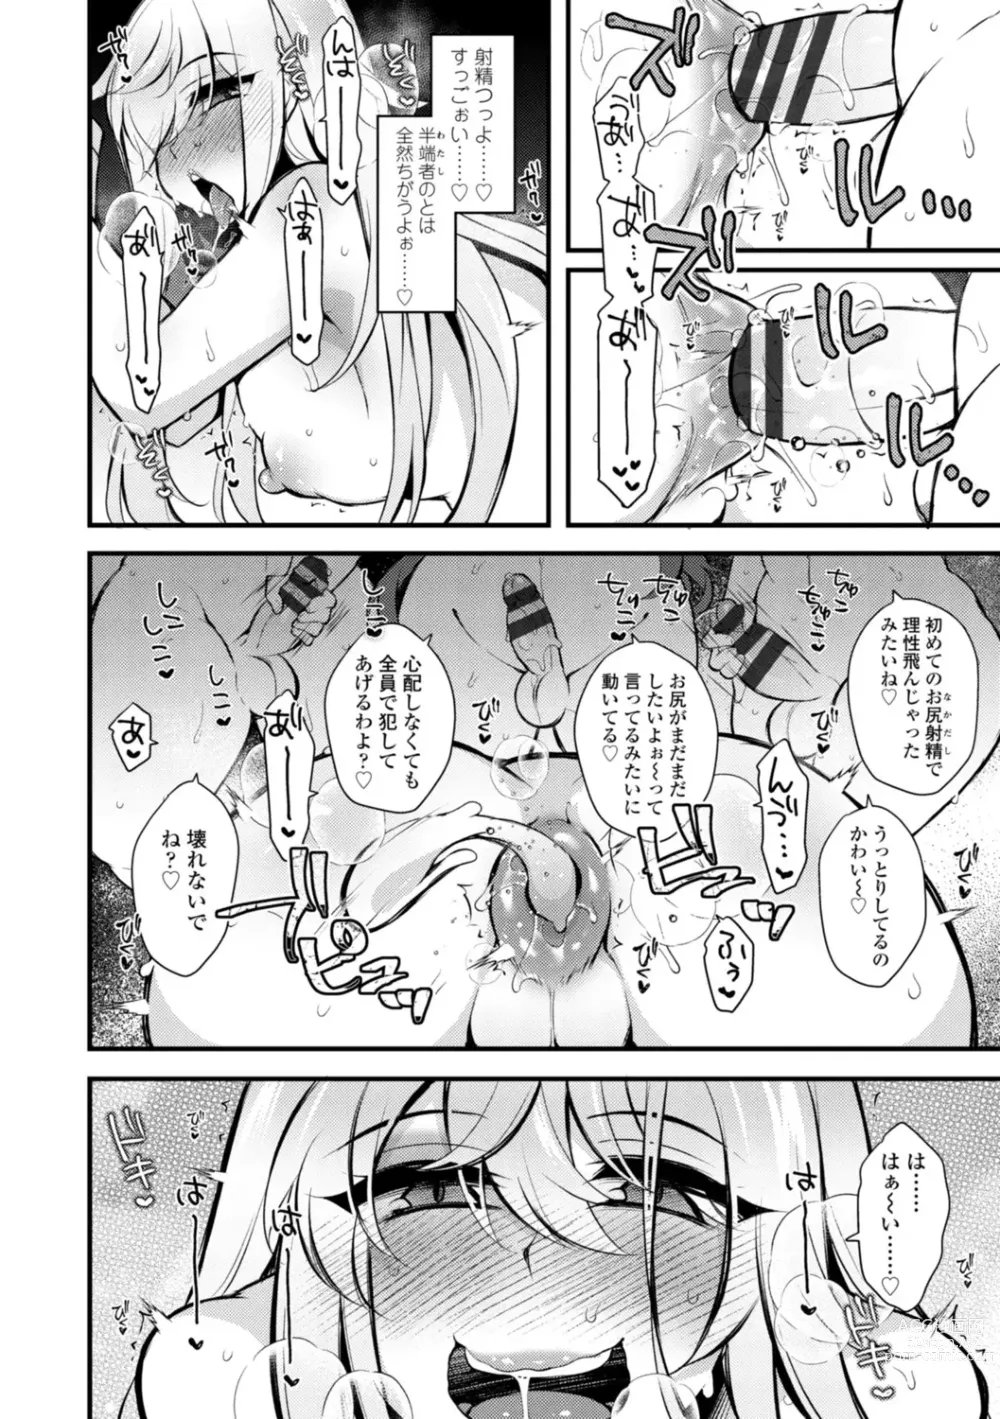 Page 184 of manga Onnanoko-sama no Iu Toori